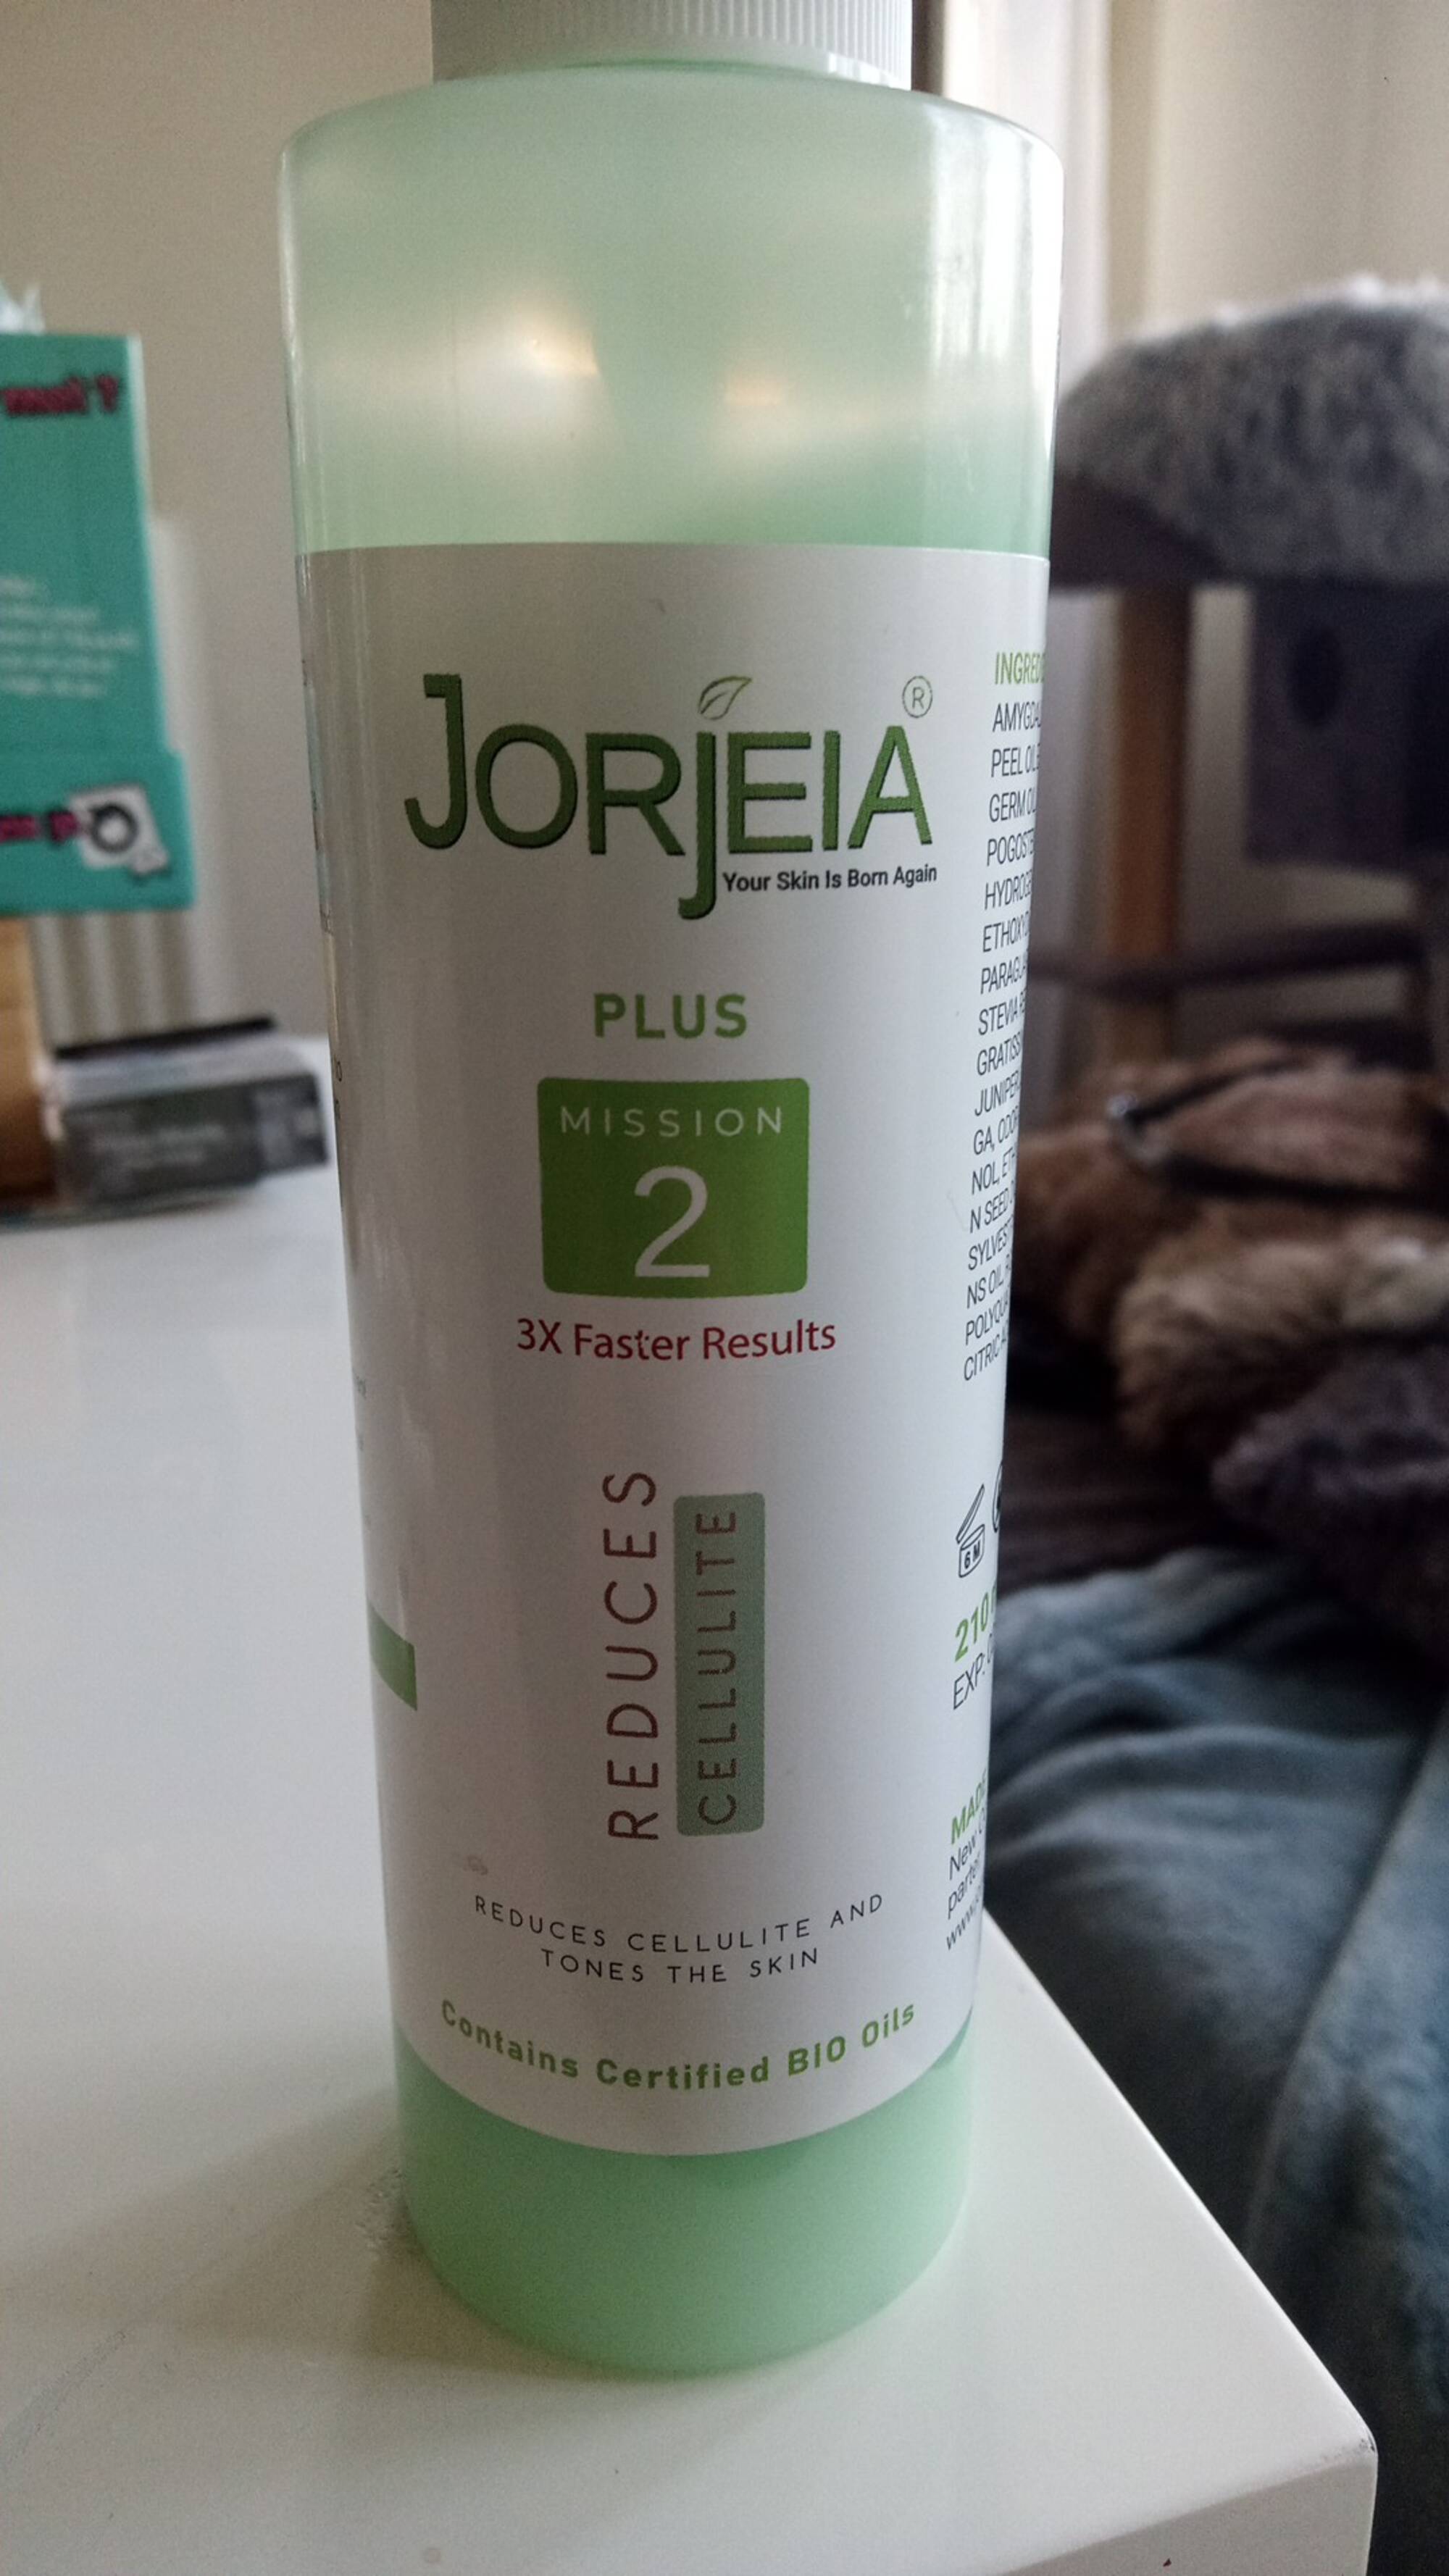 JORJEIA - Plus mission 2 - Reduces cellulite